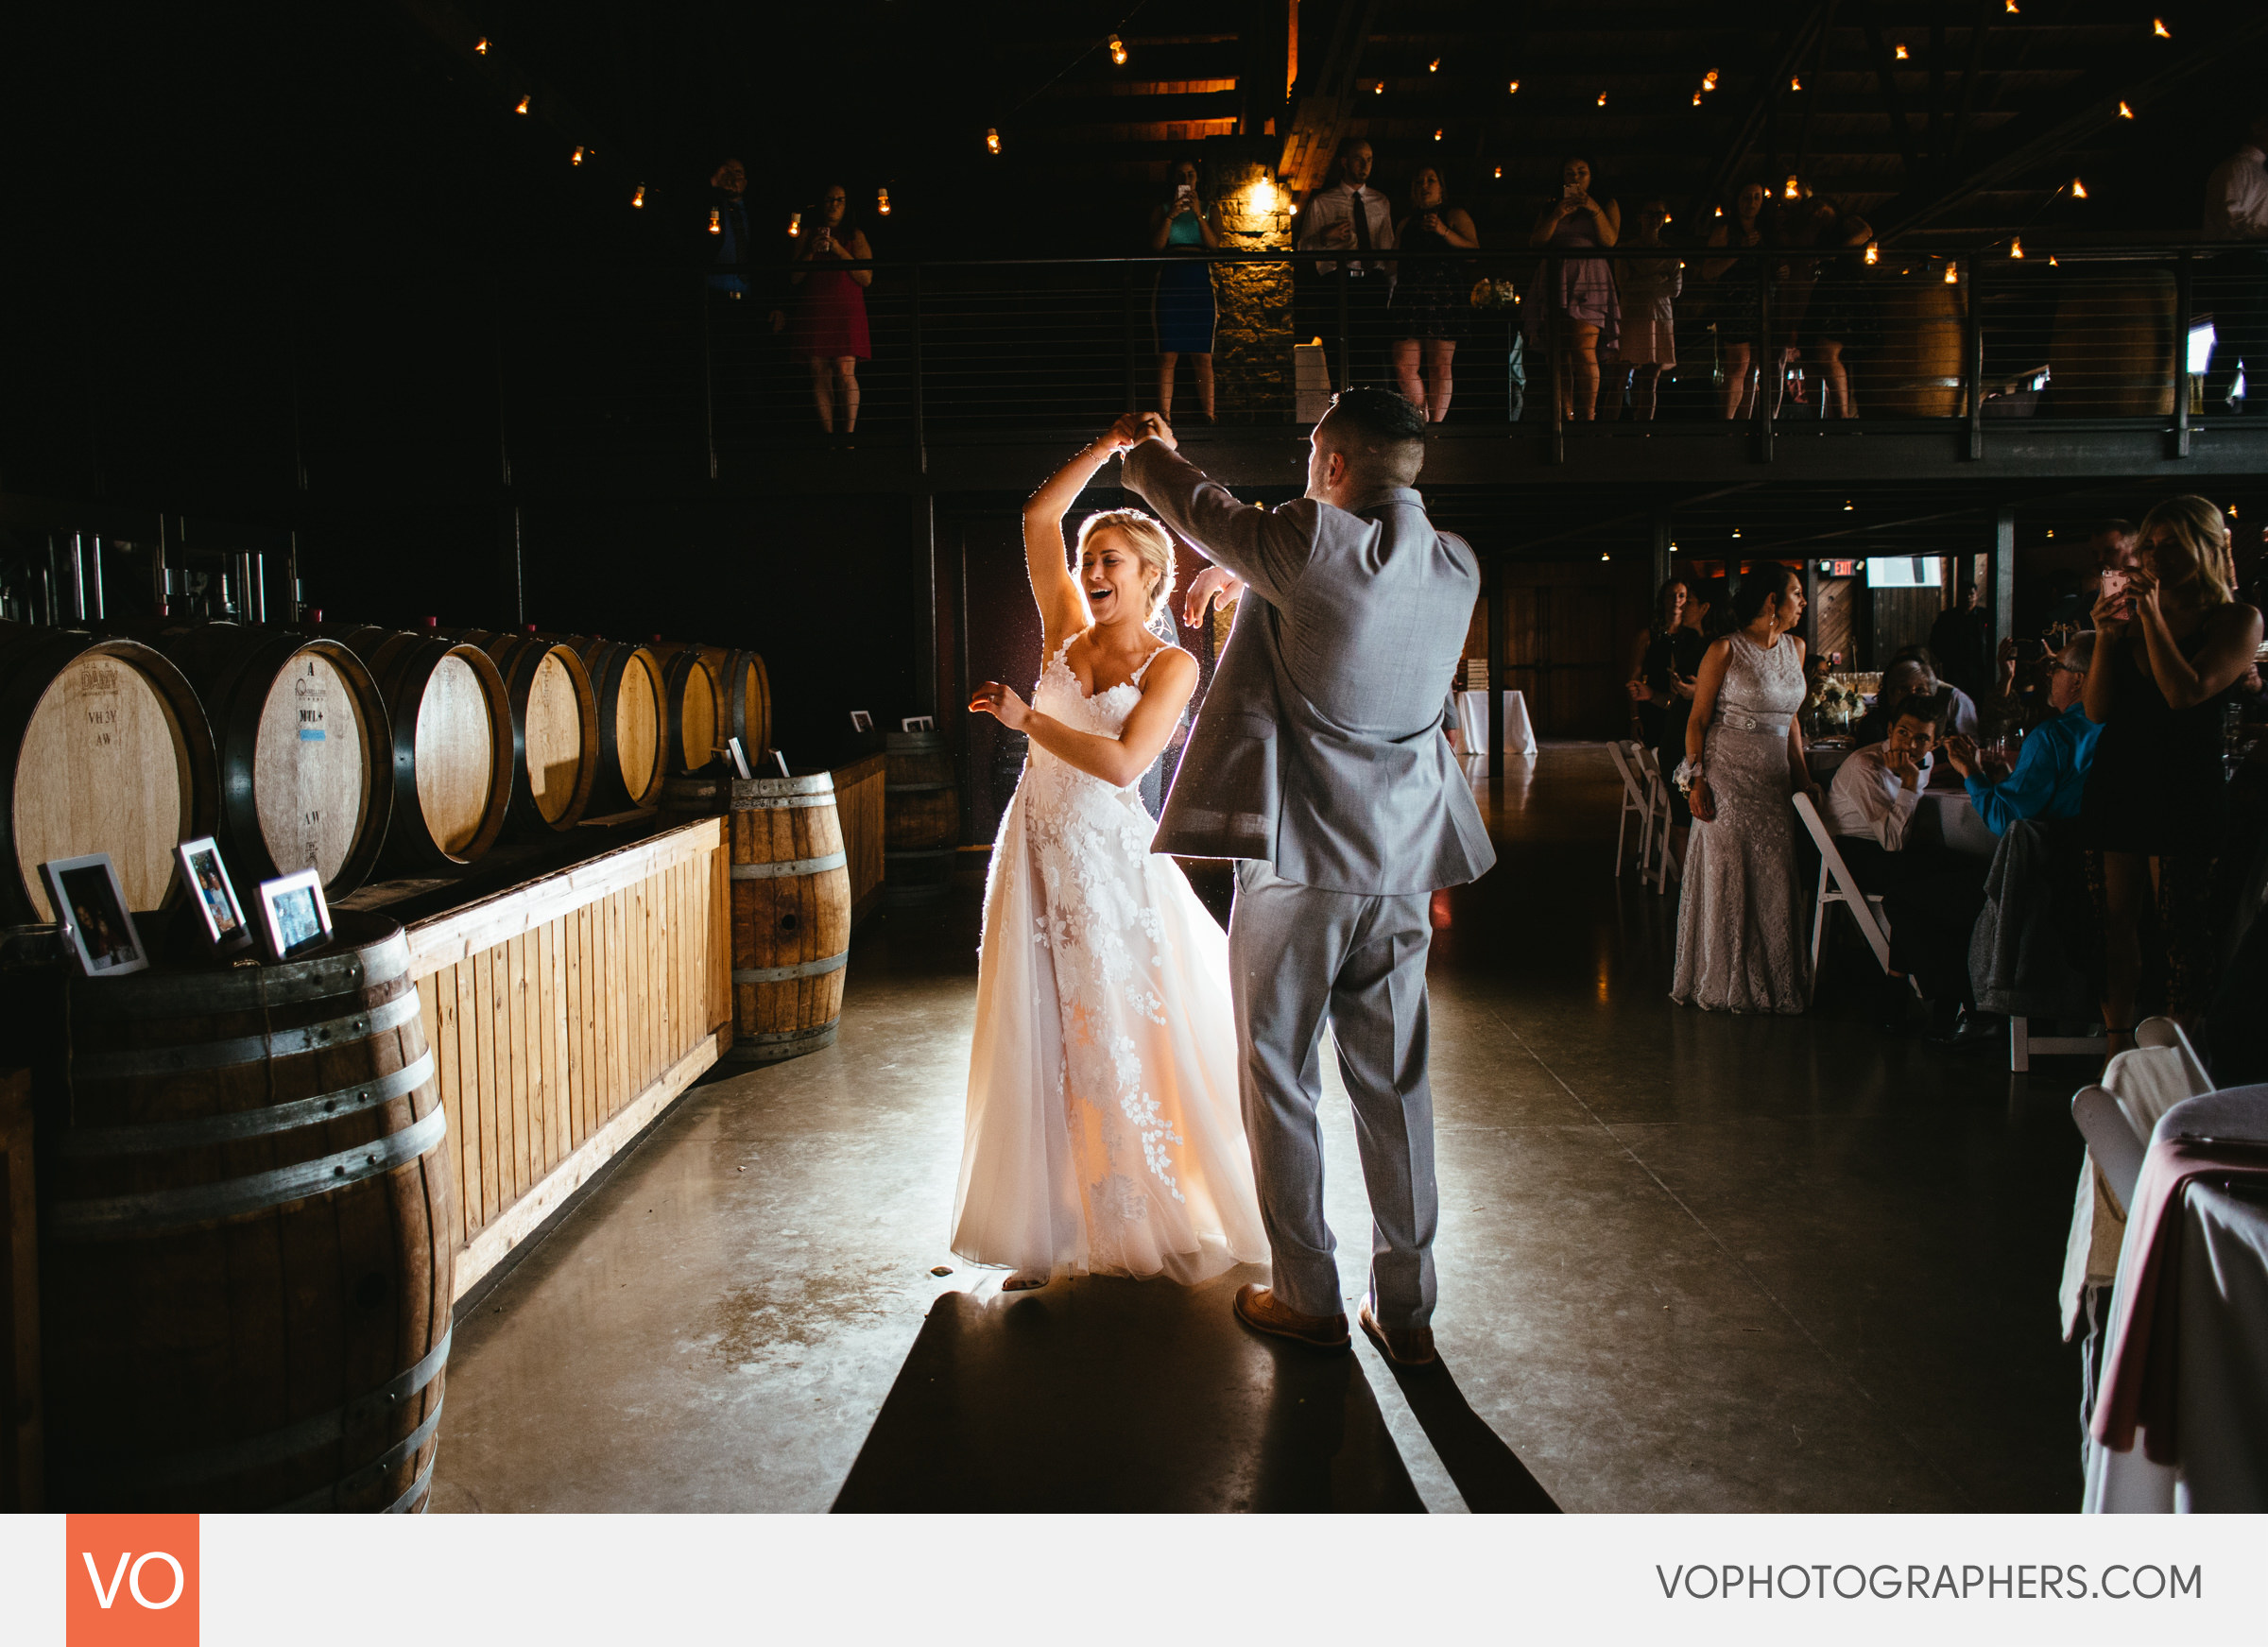 Saltwater Farms Vineyard Wedding